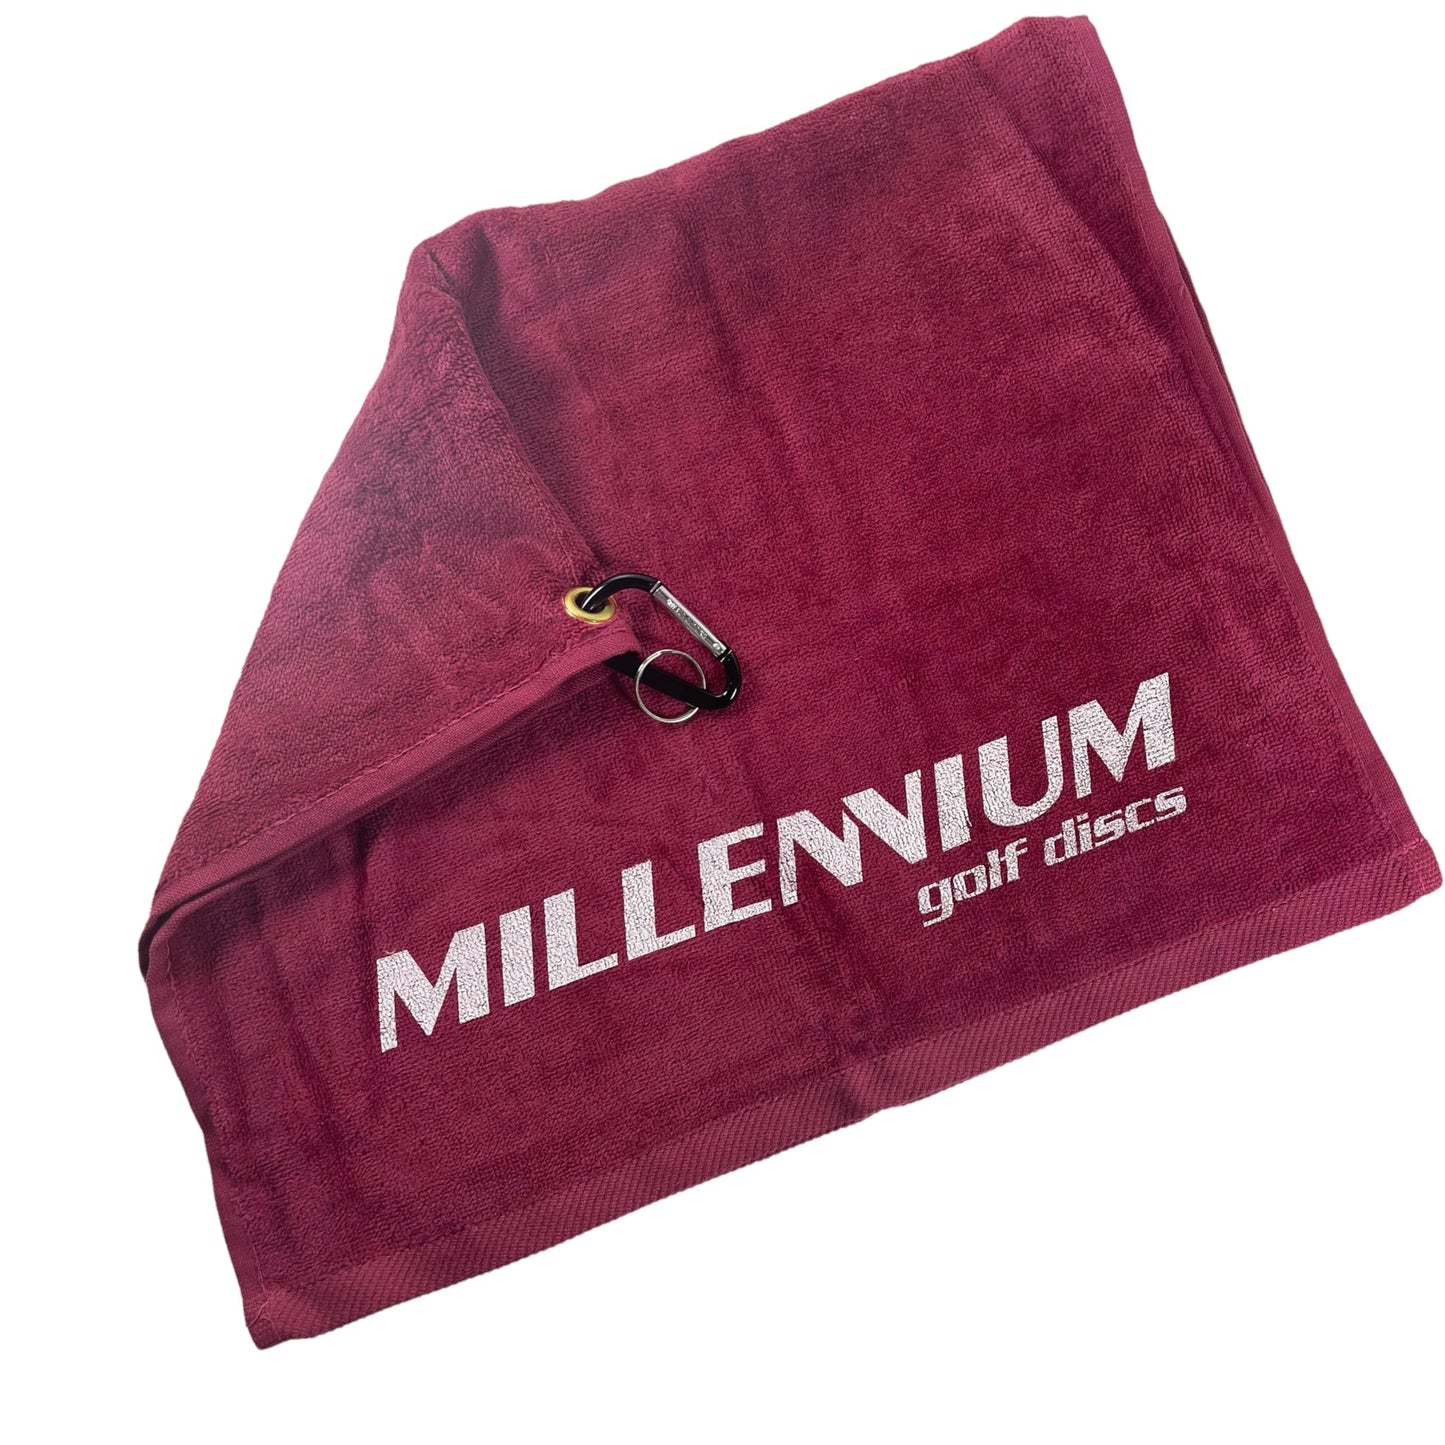 Millennium Golf Discs Millennium Discs Towel Disc Golf